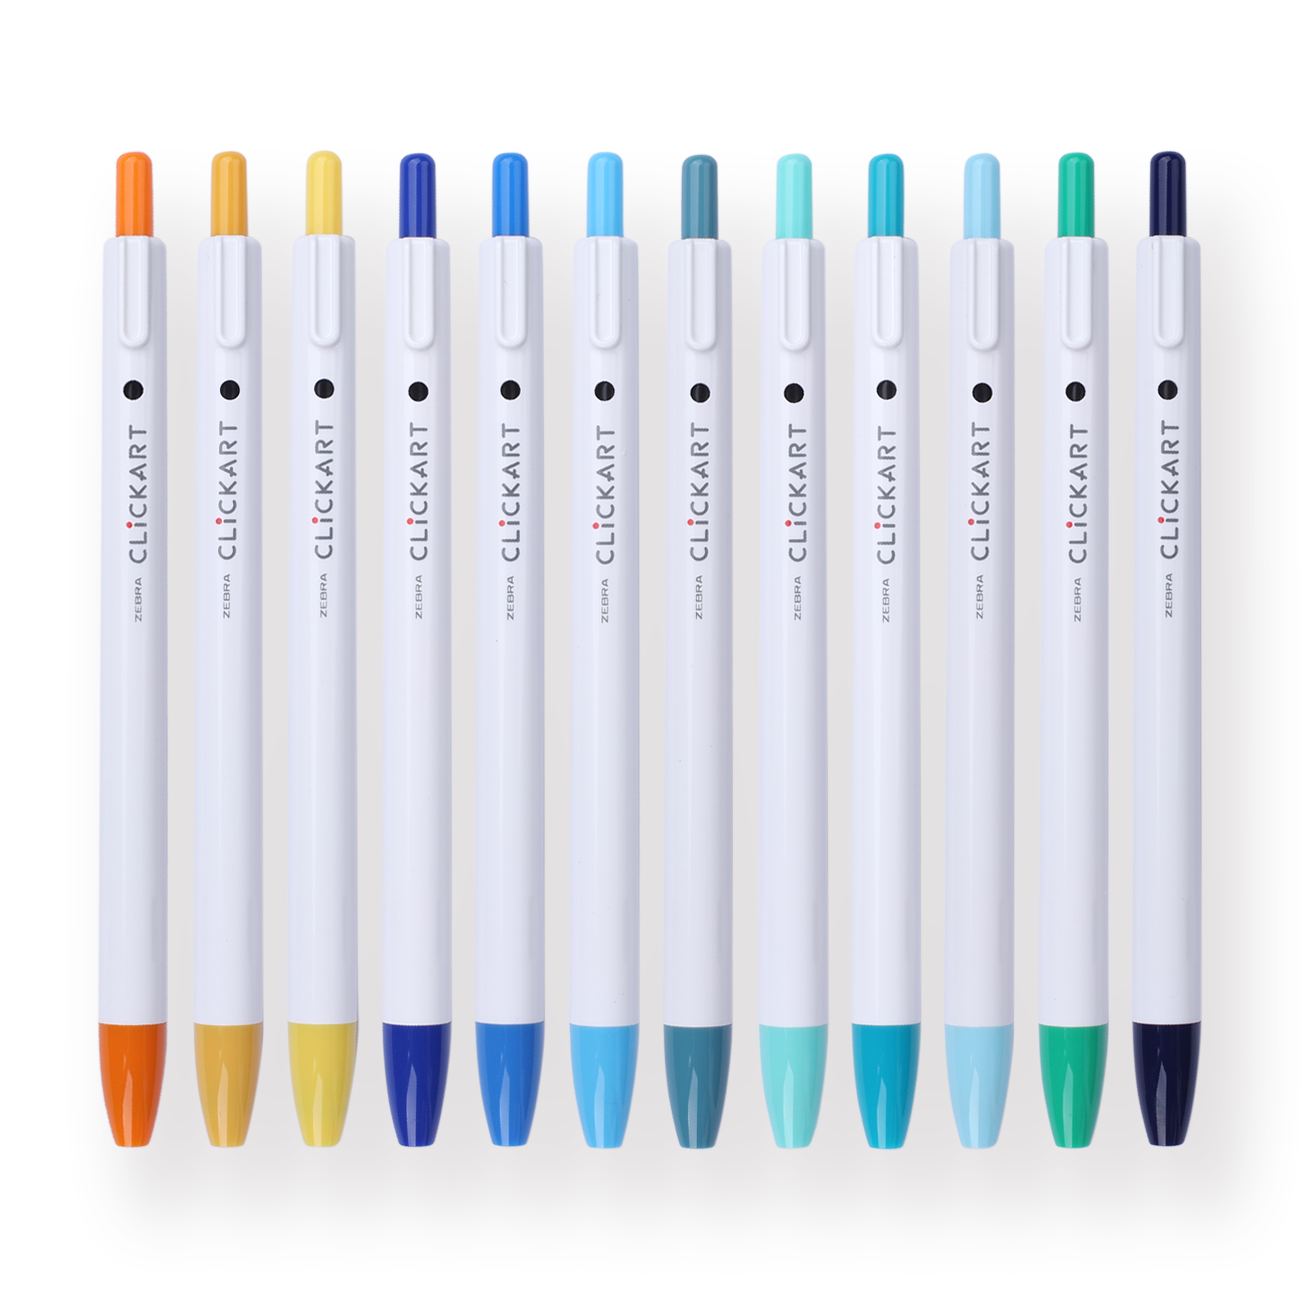 Zebra ClickArt Marker Pens - 36 Colour Set